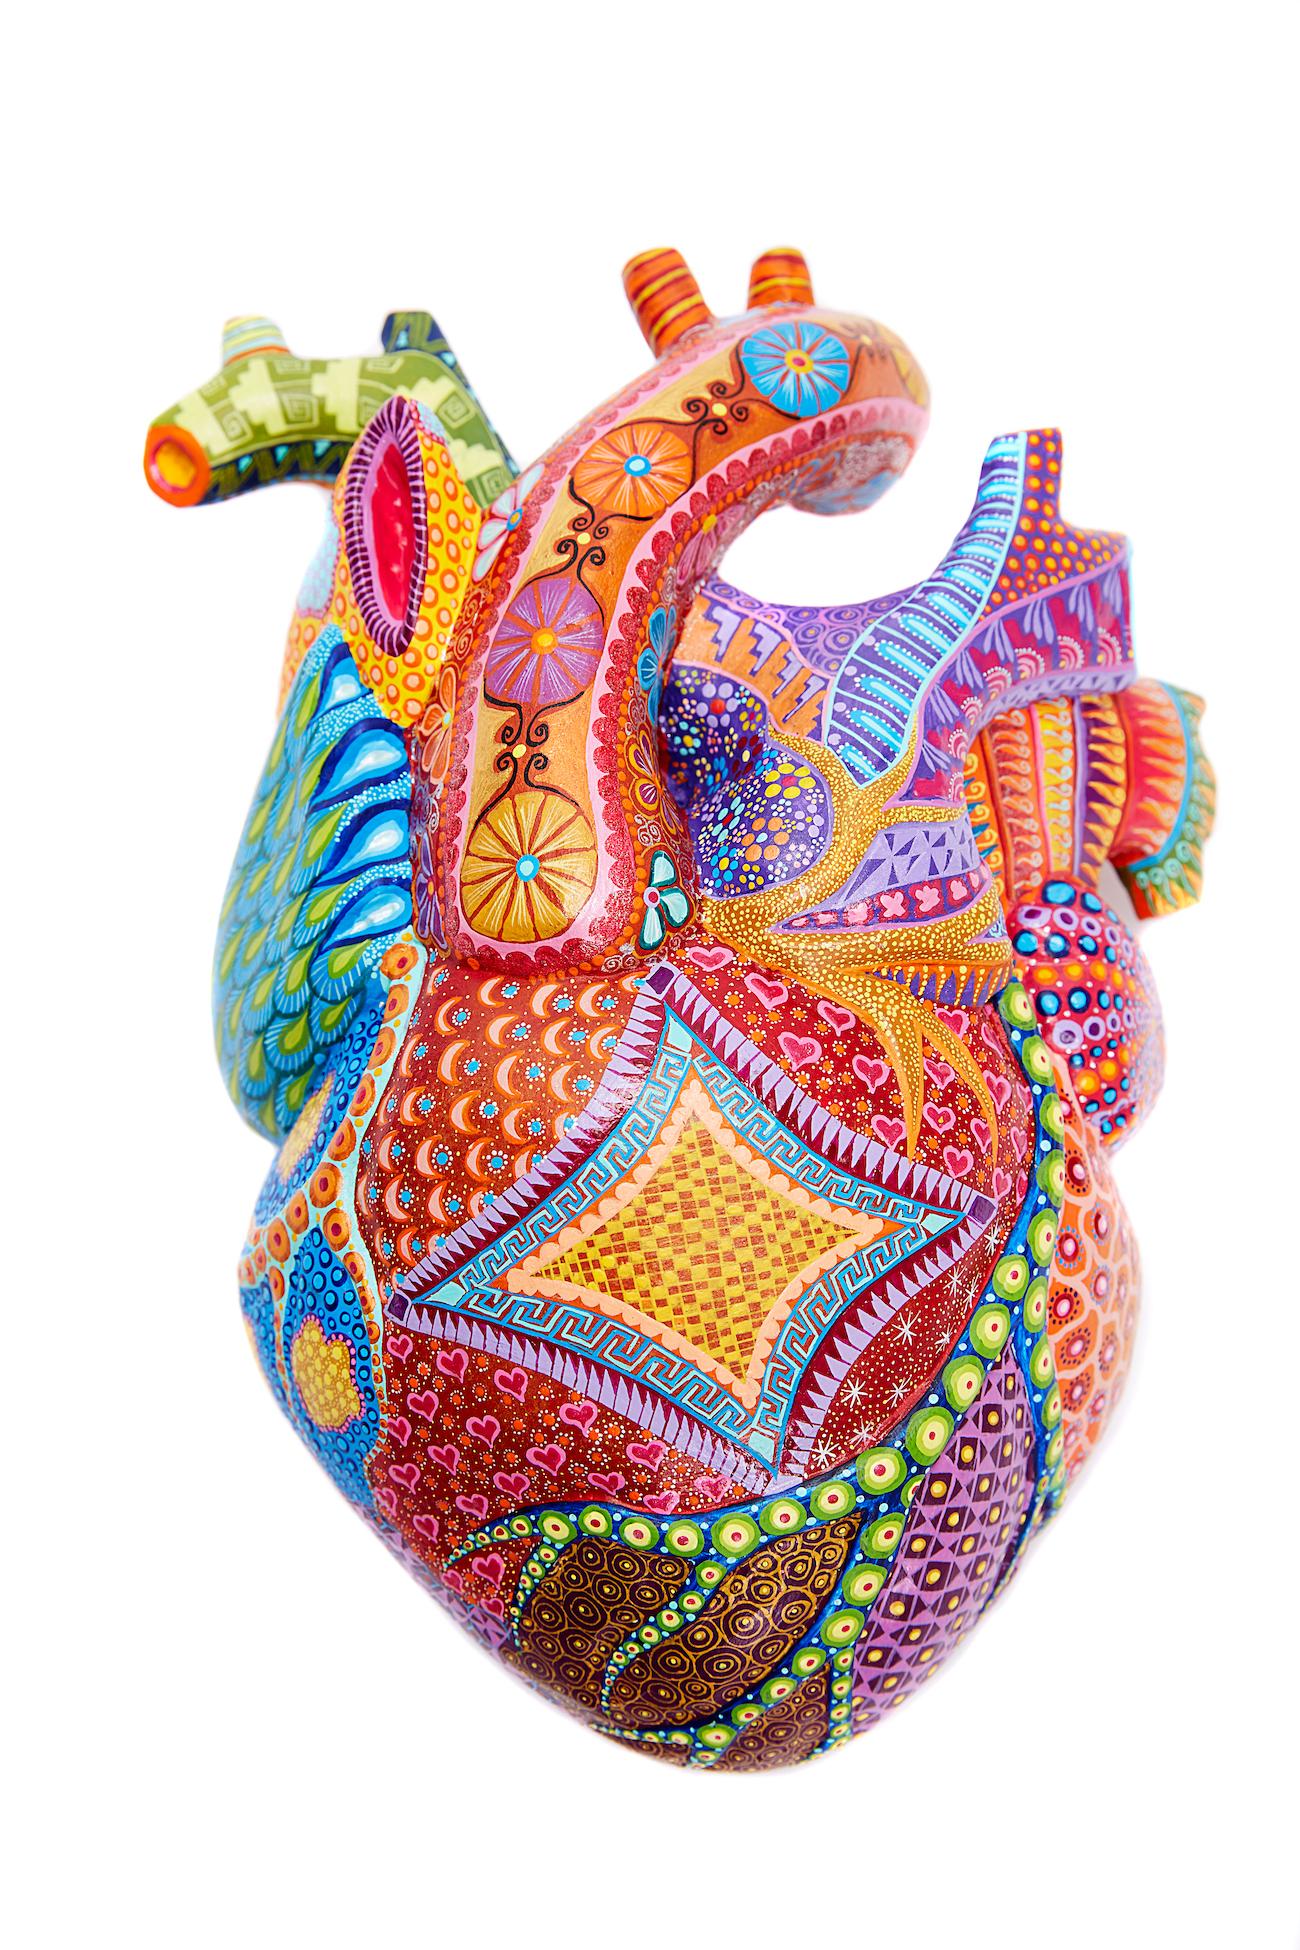 Corazón Zapoteco - Zapotec Heart  This Mexican Wood Turtle was made with Copal w - Folk Art Sculpture by Efrain Fuentes y Silvia Gomez